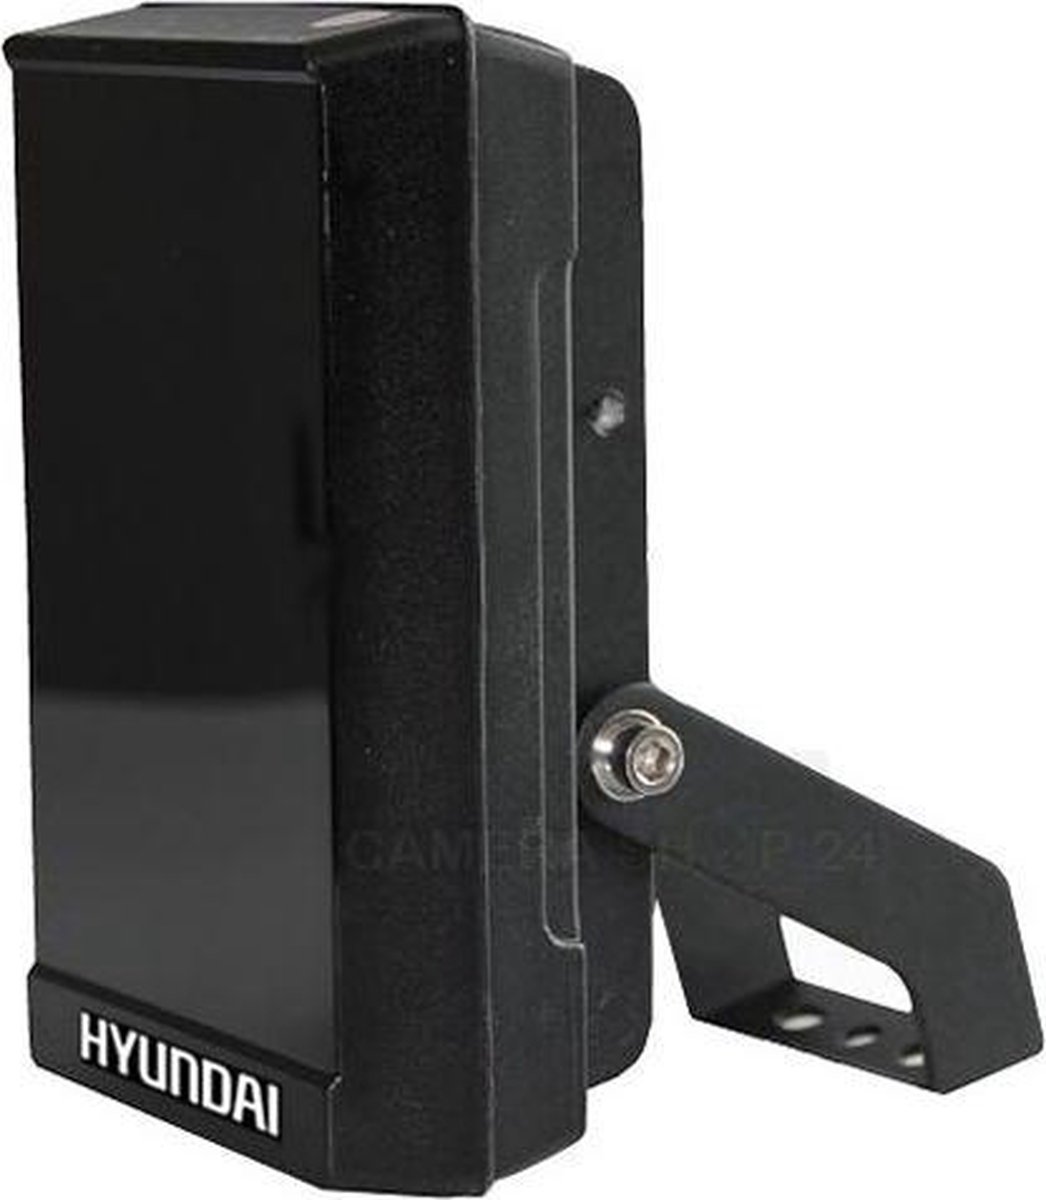 Hyundai Infrarood Illuminator - Verhoogt Nachtzicht Tot 50 Meter - 12 LEDs - 60 Graden Kijkhoek - IR Lamp Camerabewaking - Aluminium Behuizing